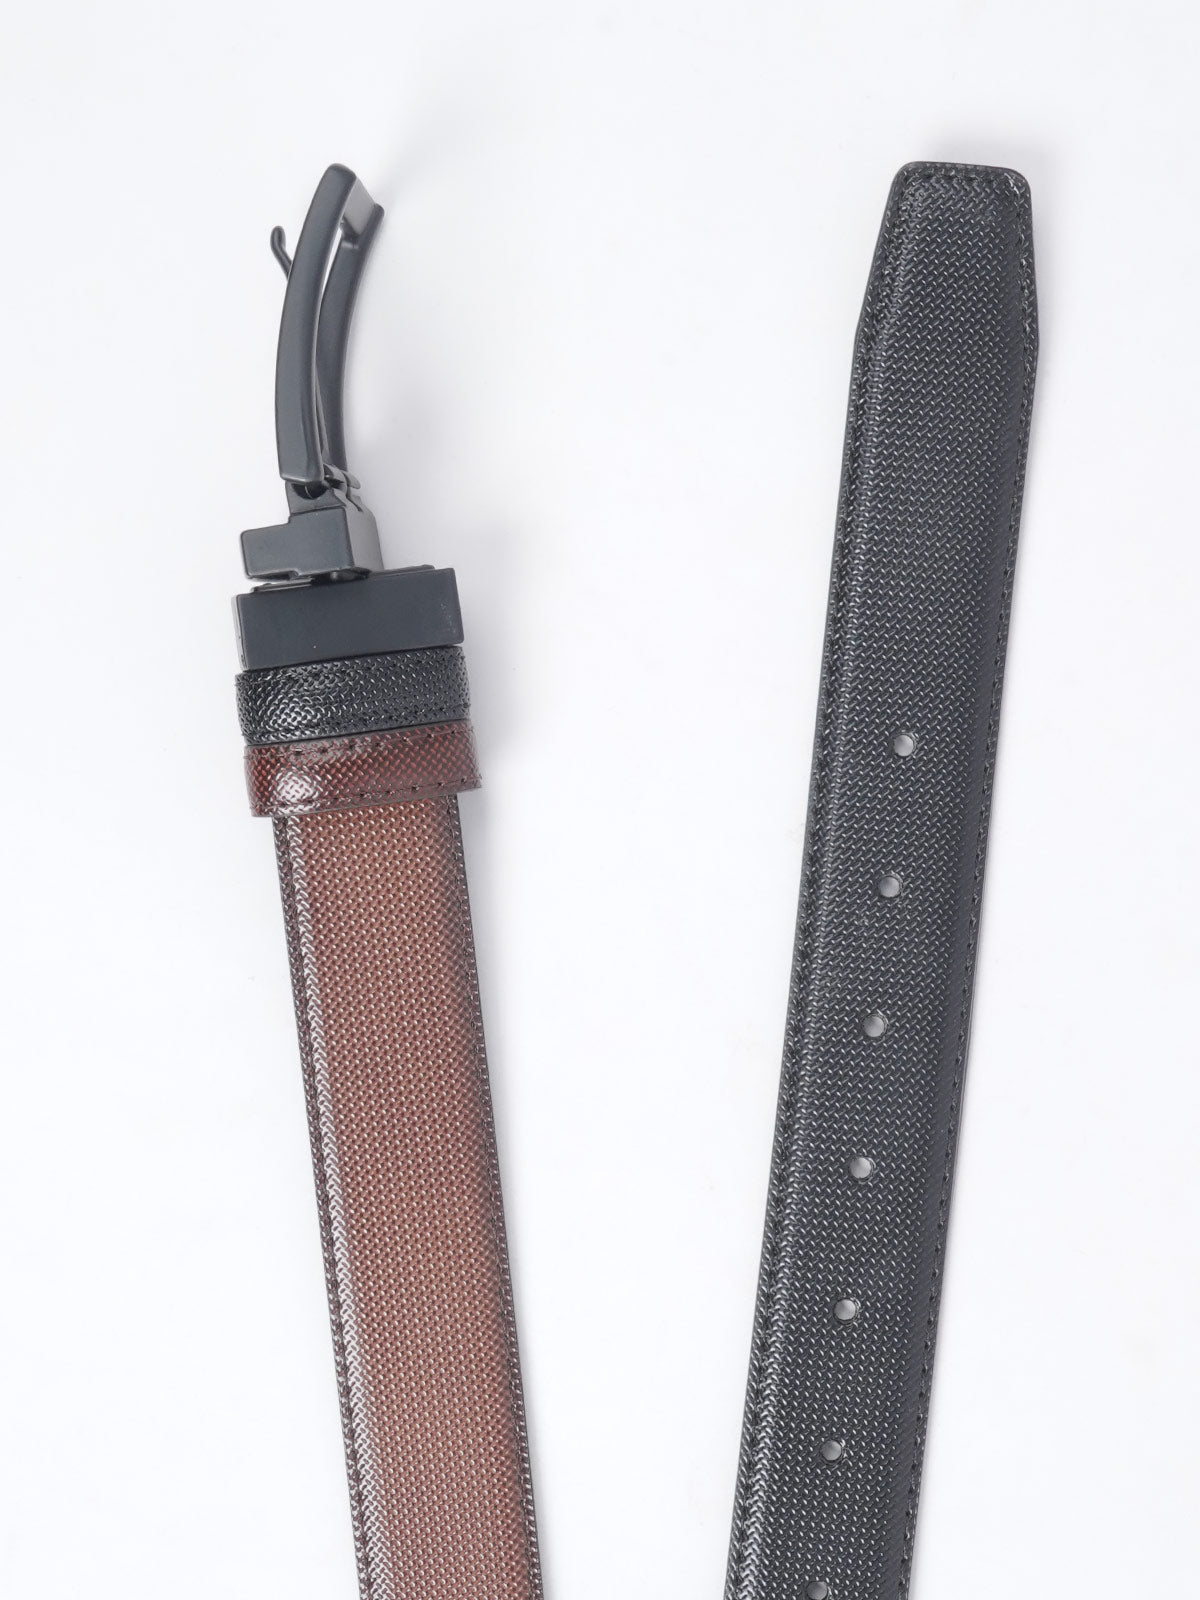 BlackTextured Leather Belt (BELT-659)